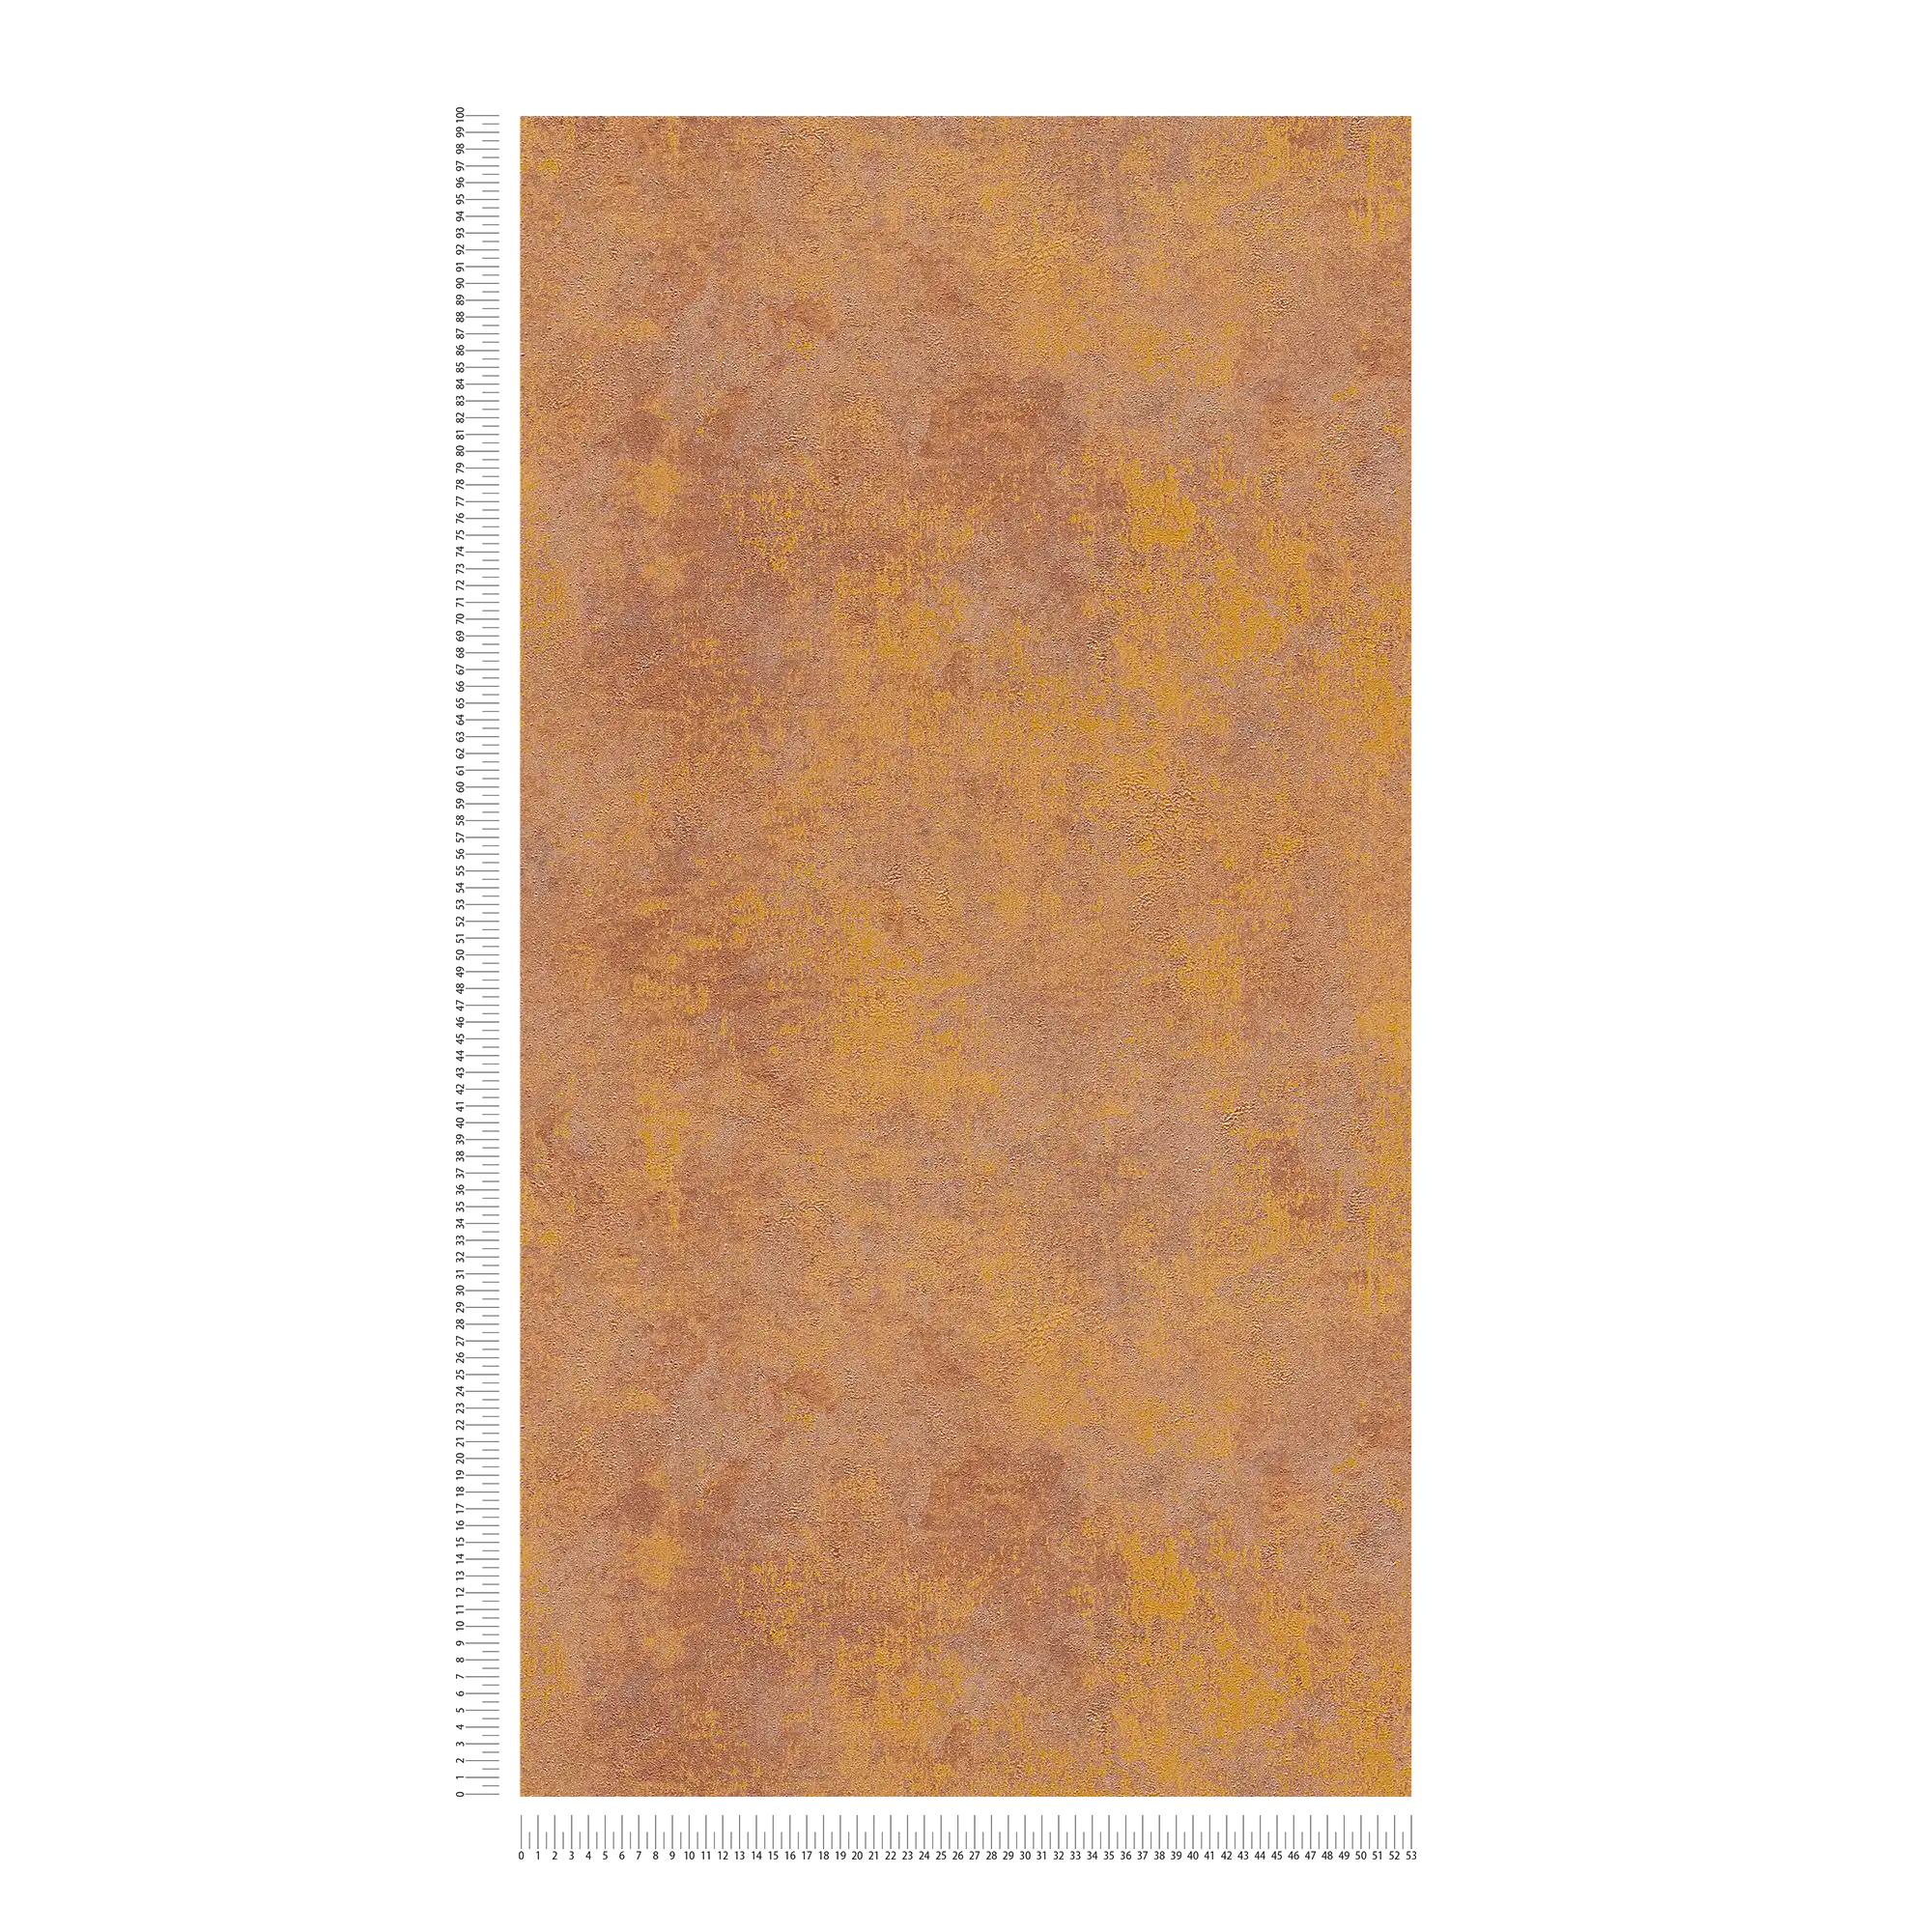             Vliesbehang roestlook met glanseffect - oranje, koper, bruin
        